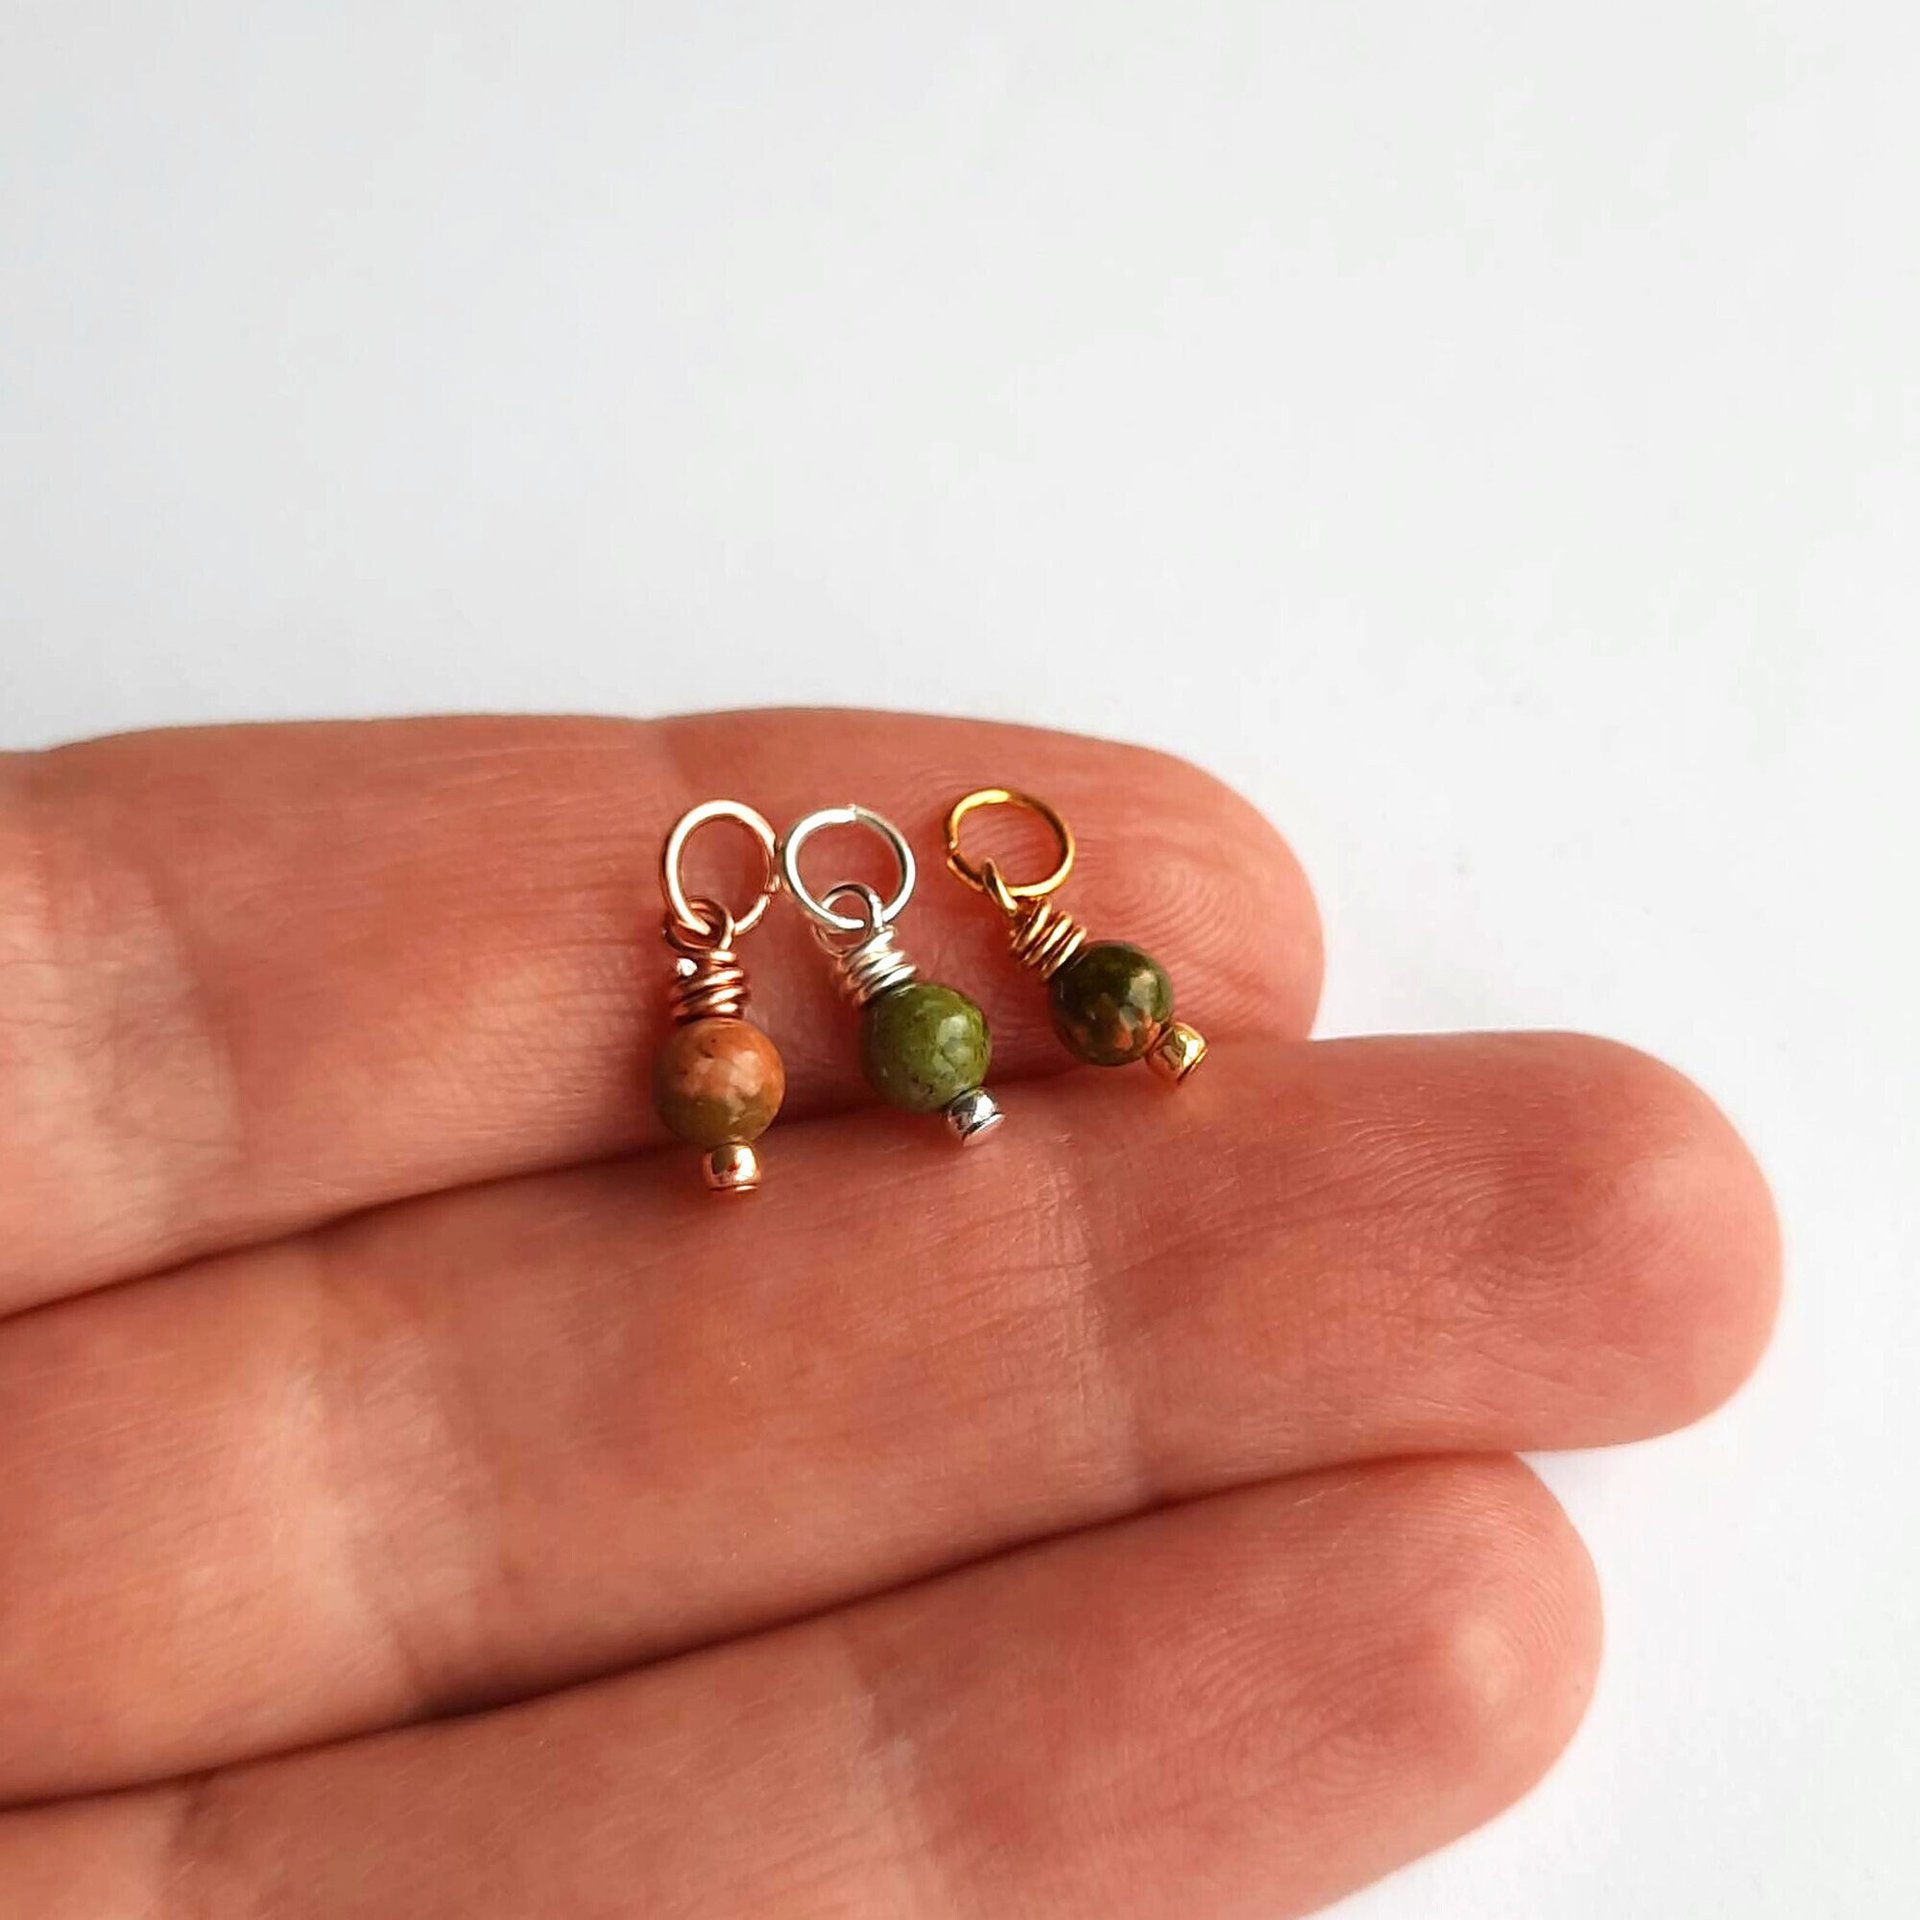 Unakite Gemstone Charm ~ Handmade by The Tiny Tree Frog Jewellery